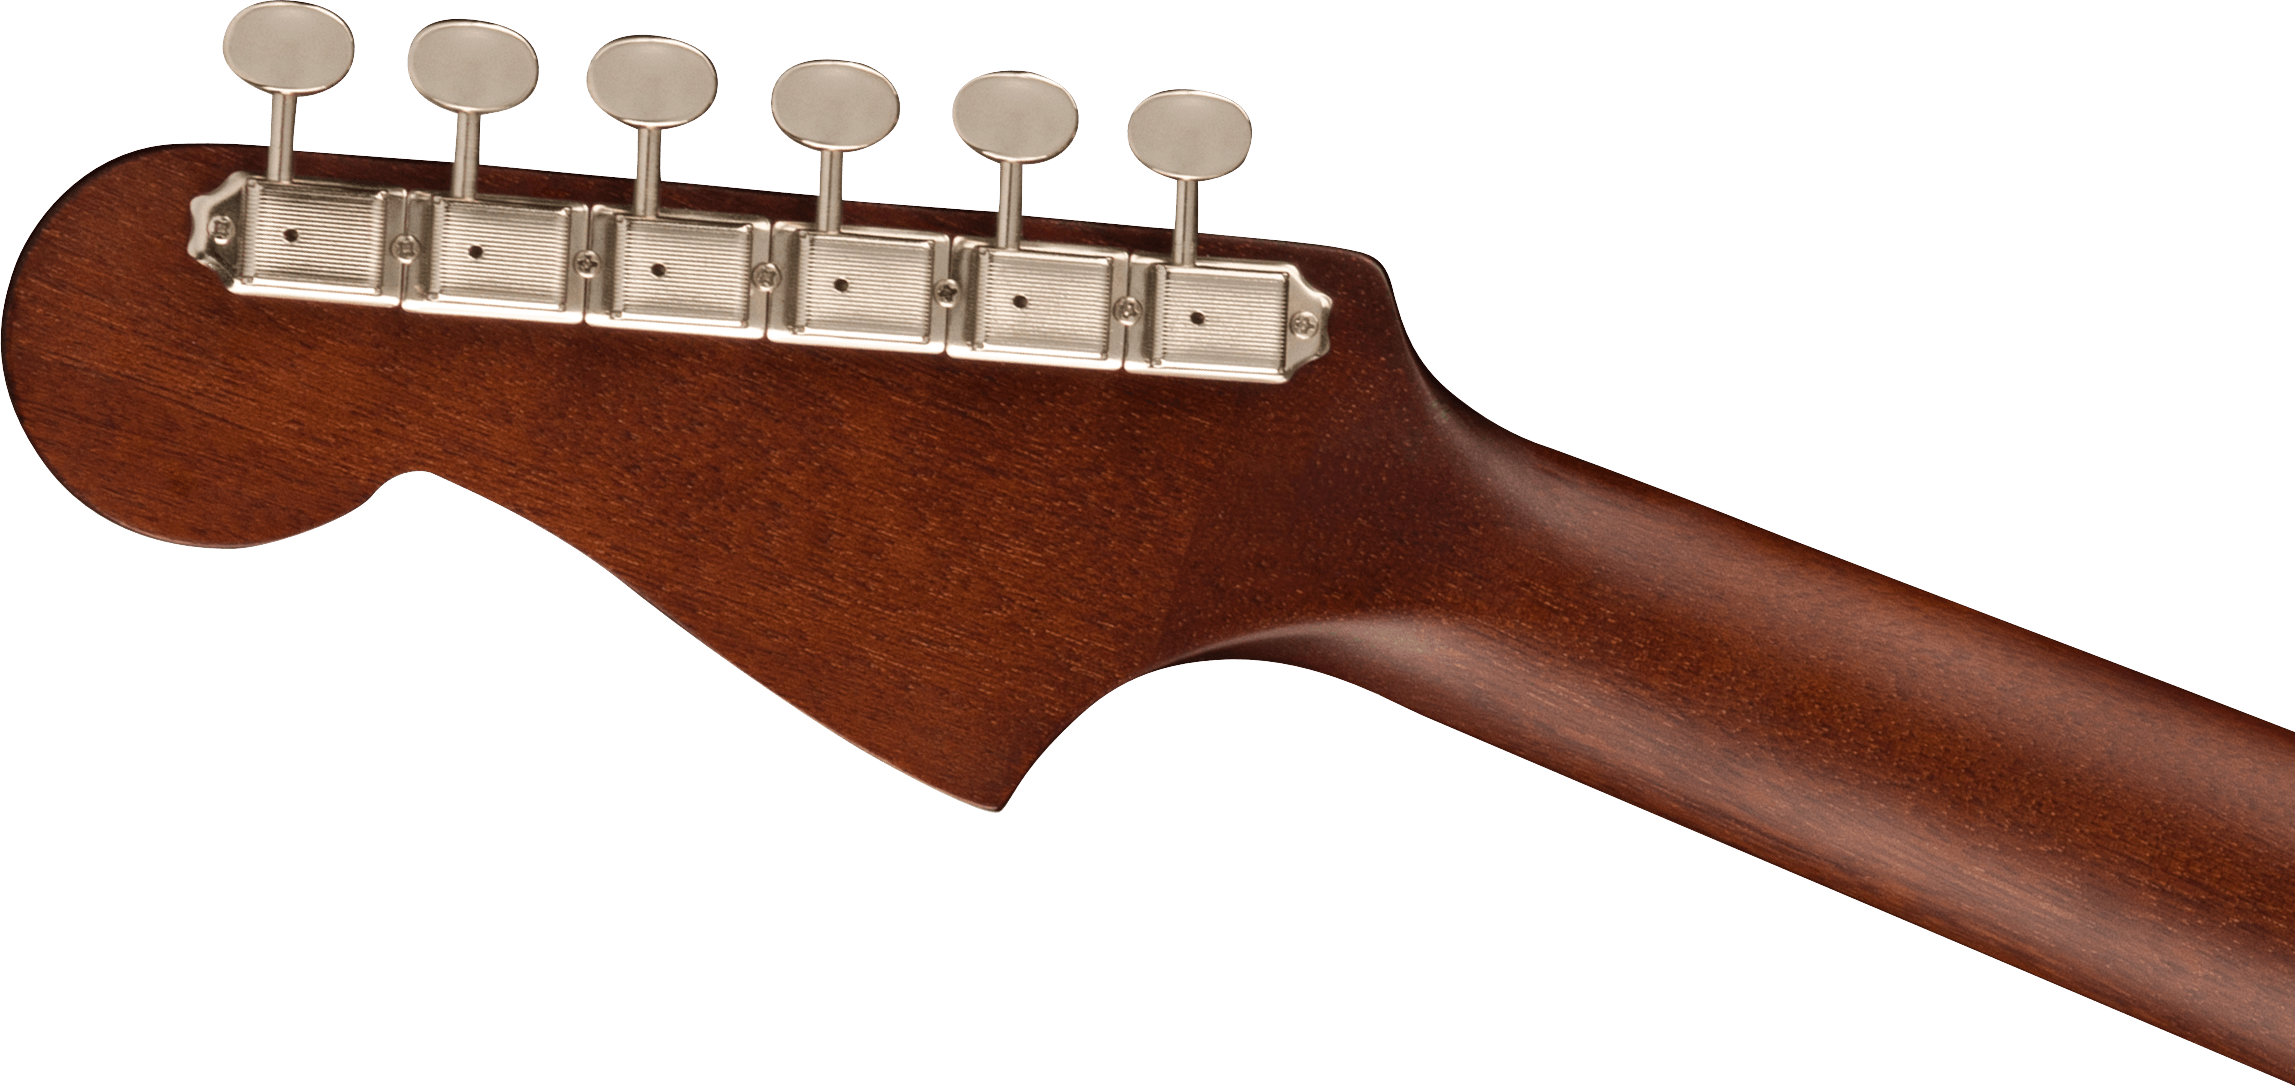 Fender California Series Malibu Player Acoustic-Electric Guitar, Sunburst